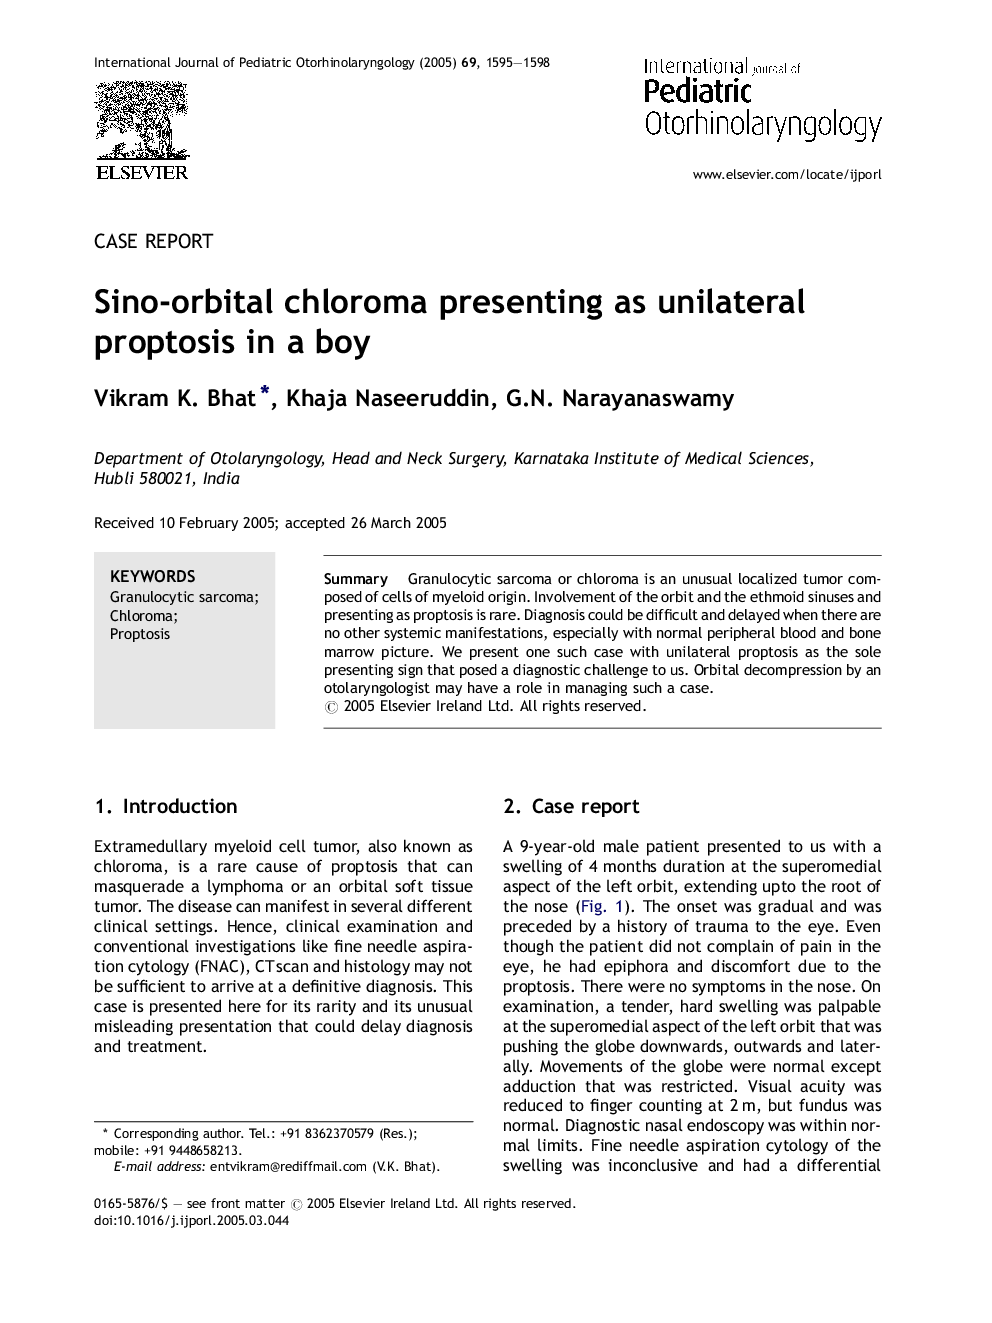 Sino-orbital chloroma presenting as unilateral proptosis in a boy